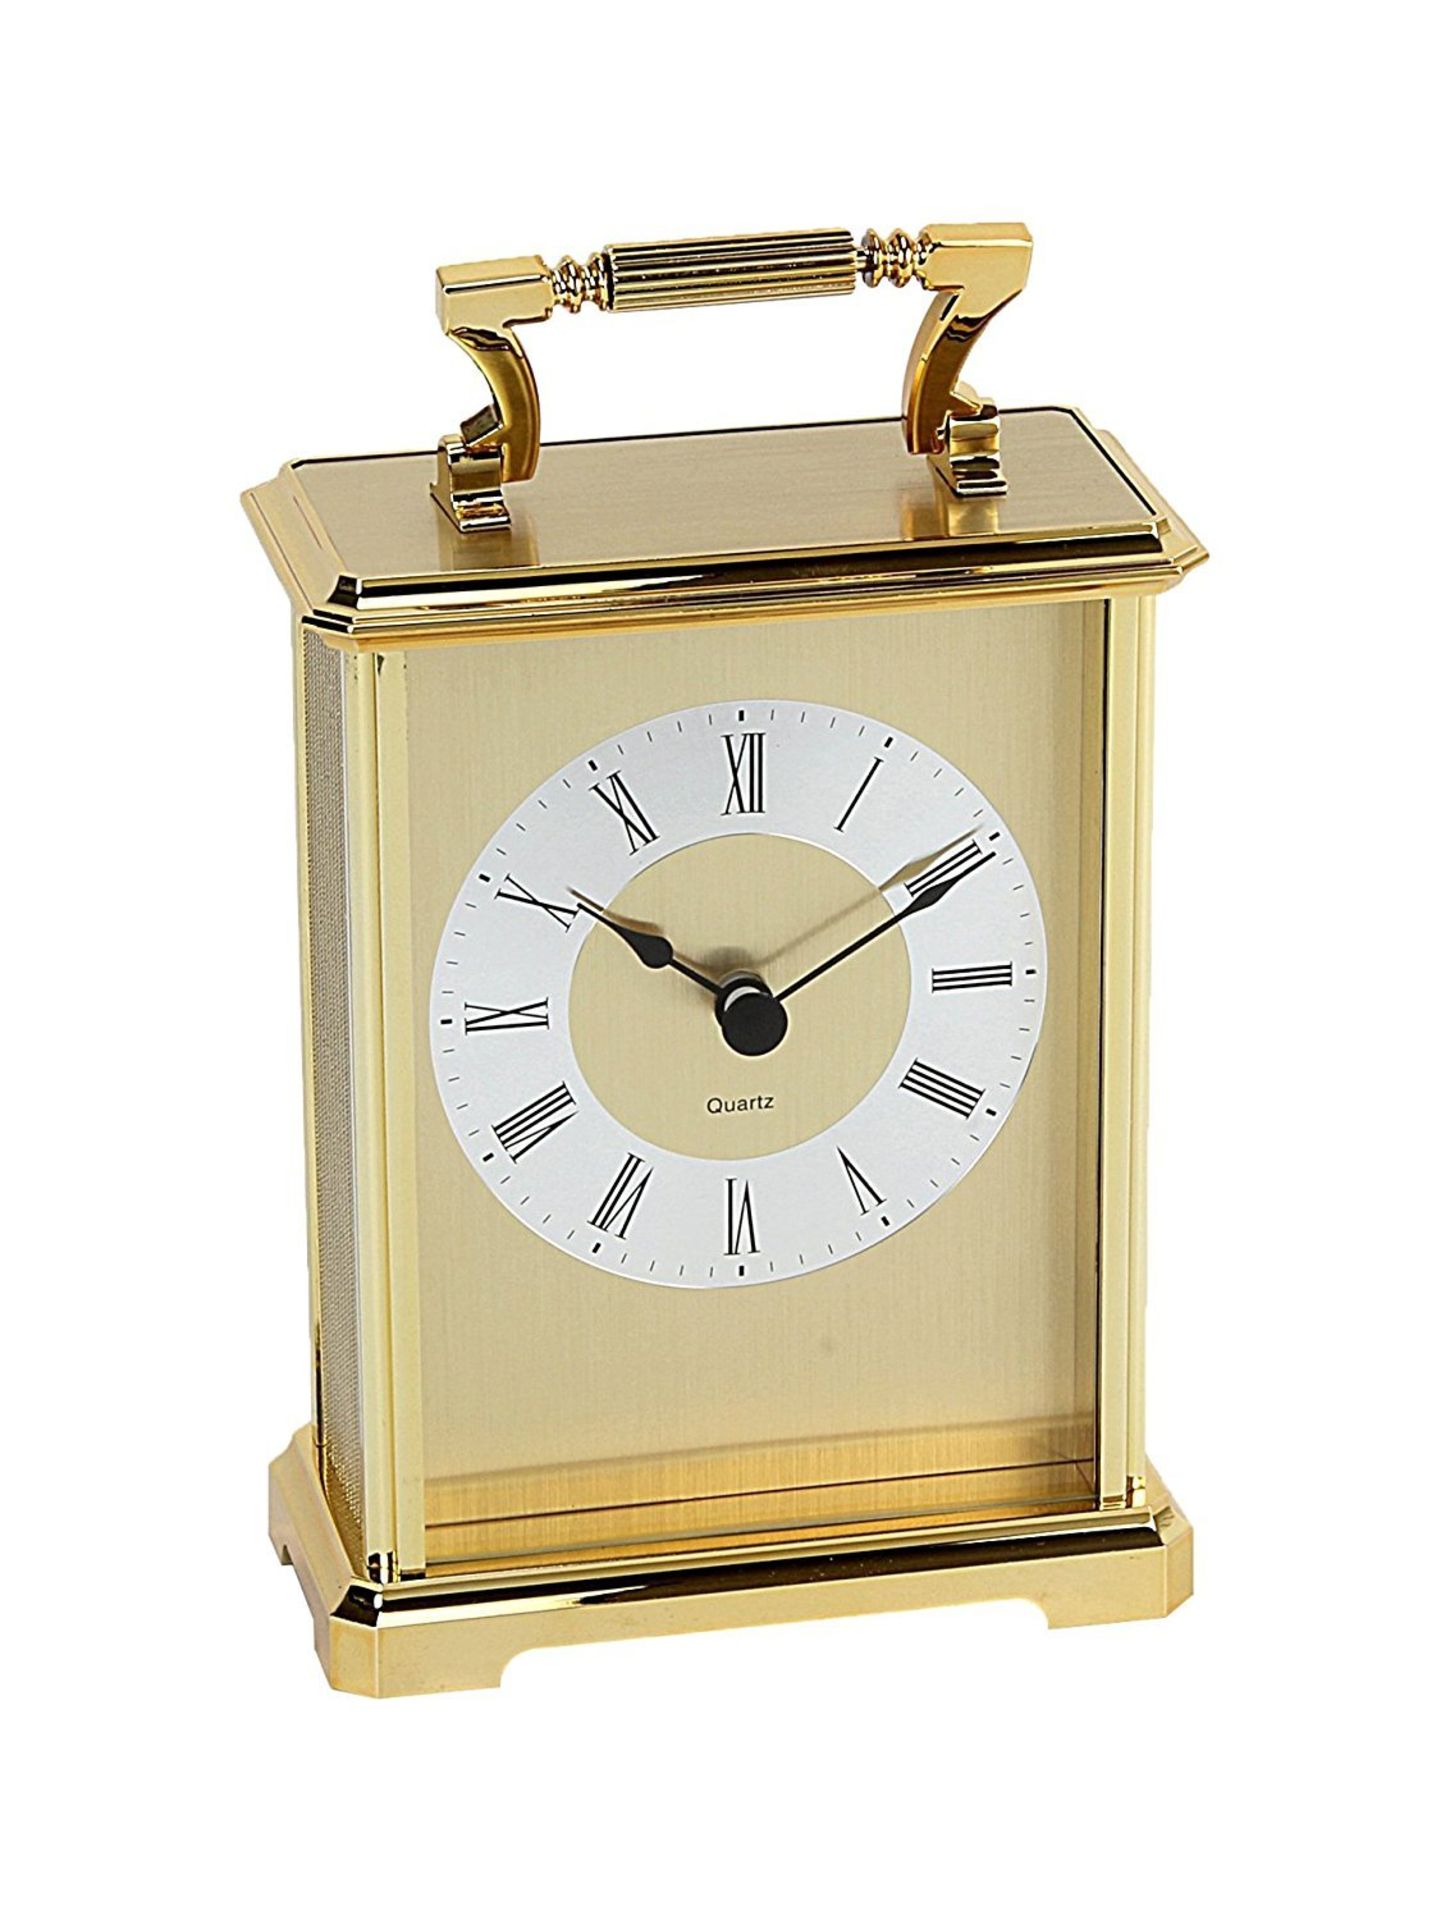 RRP £45.65 Wm. Widdop Gilt Design Roman Numerals Carriage Clock, Gold